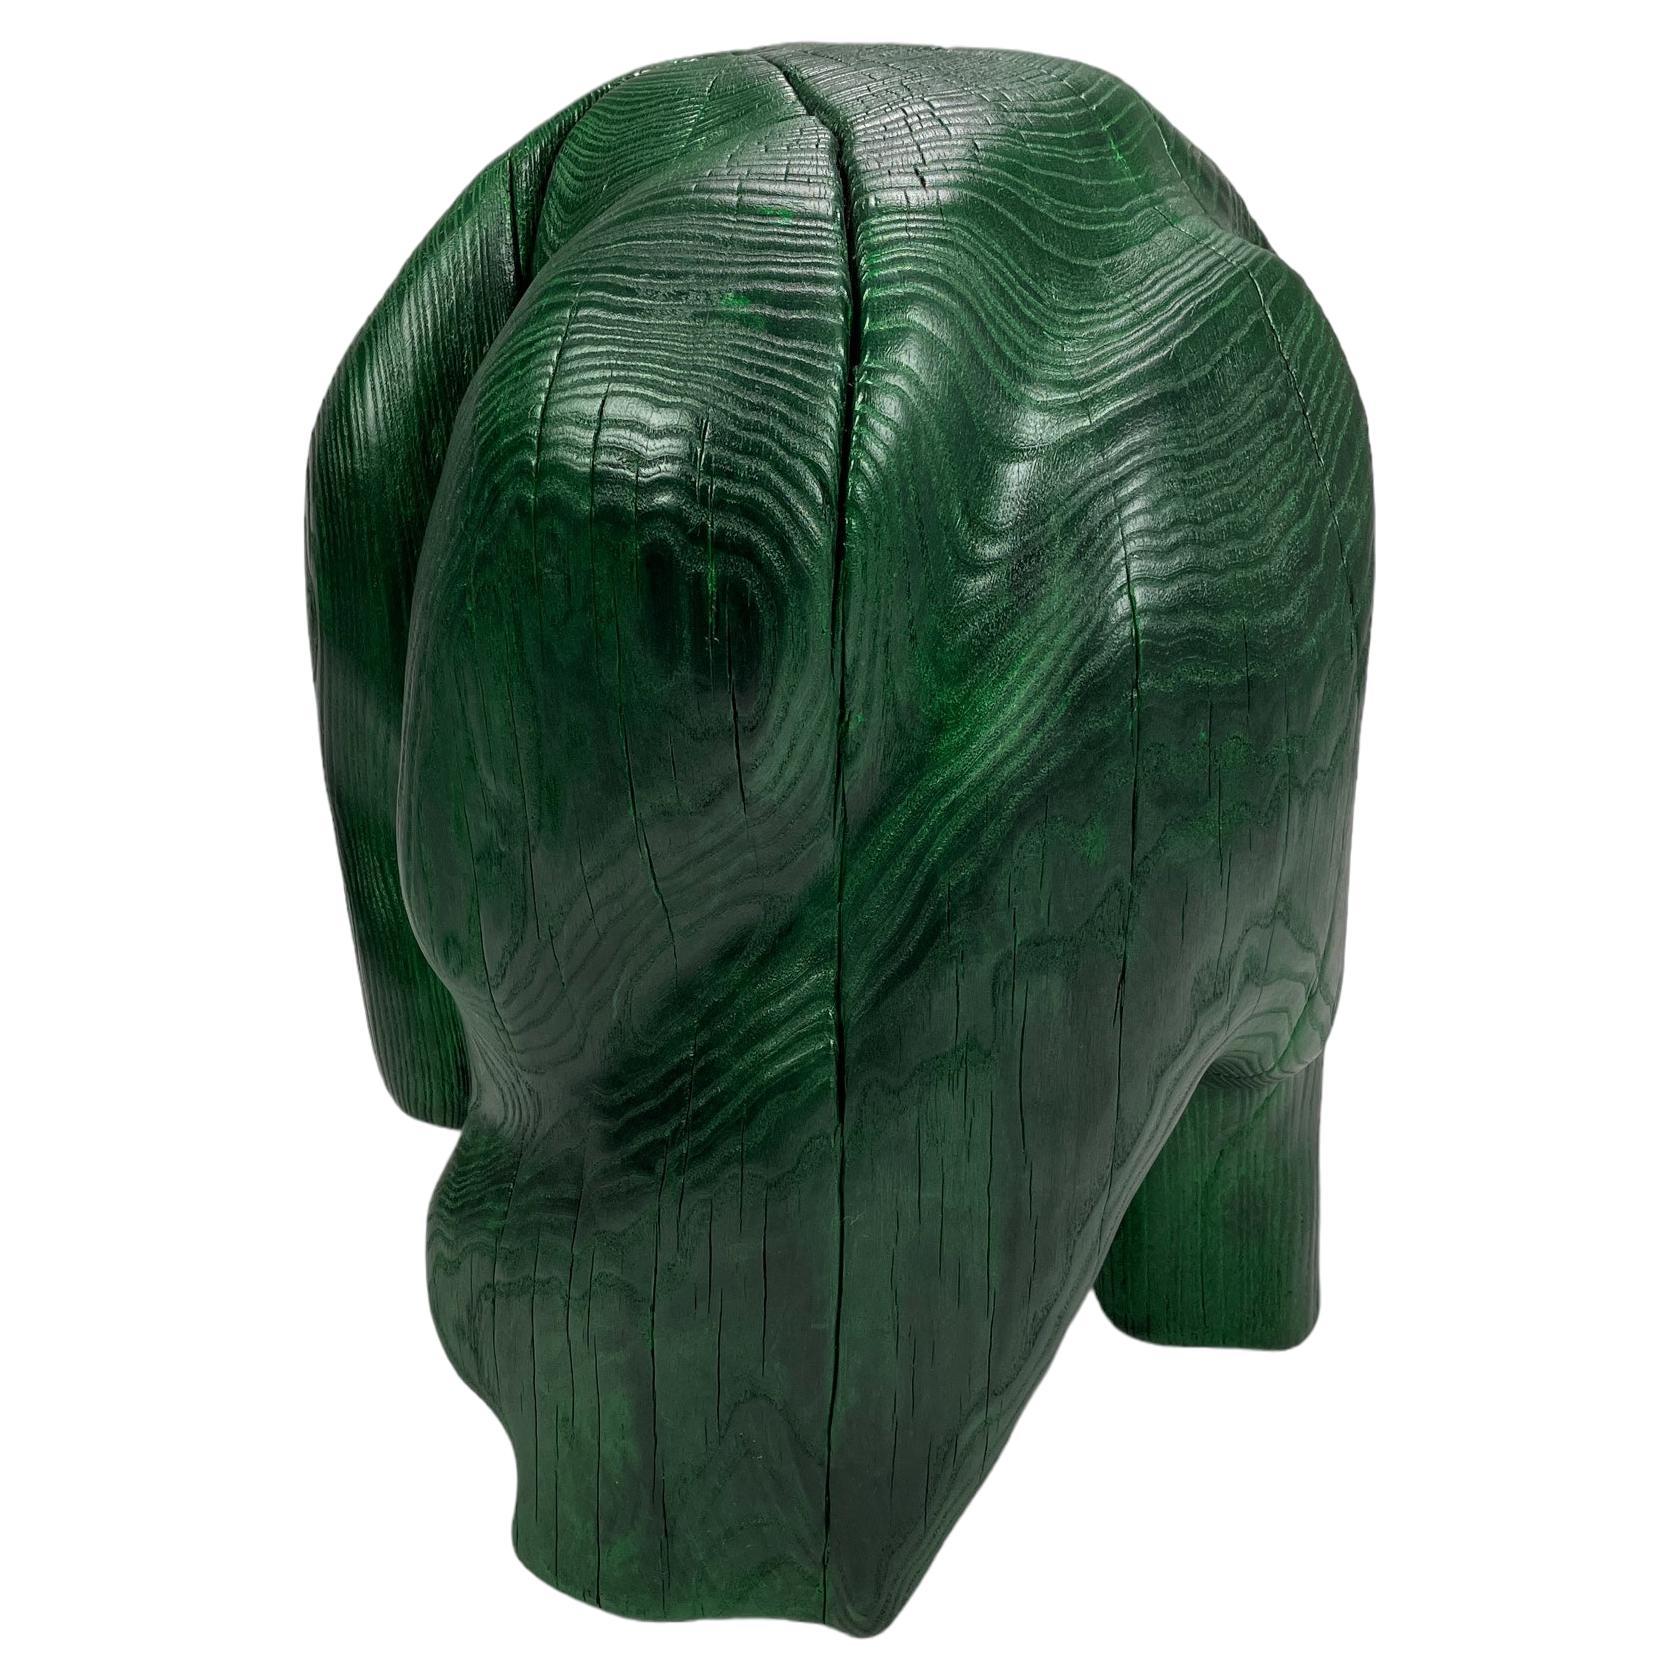 Tabouret sculptural en bois sculpté « Skinn de serpent » par ELAKFORM en vente